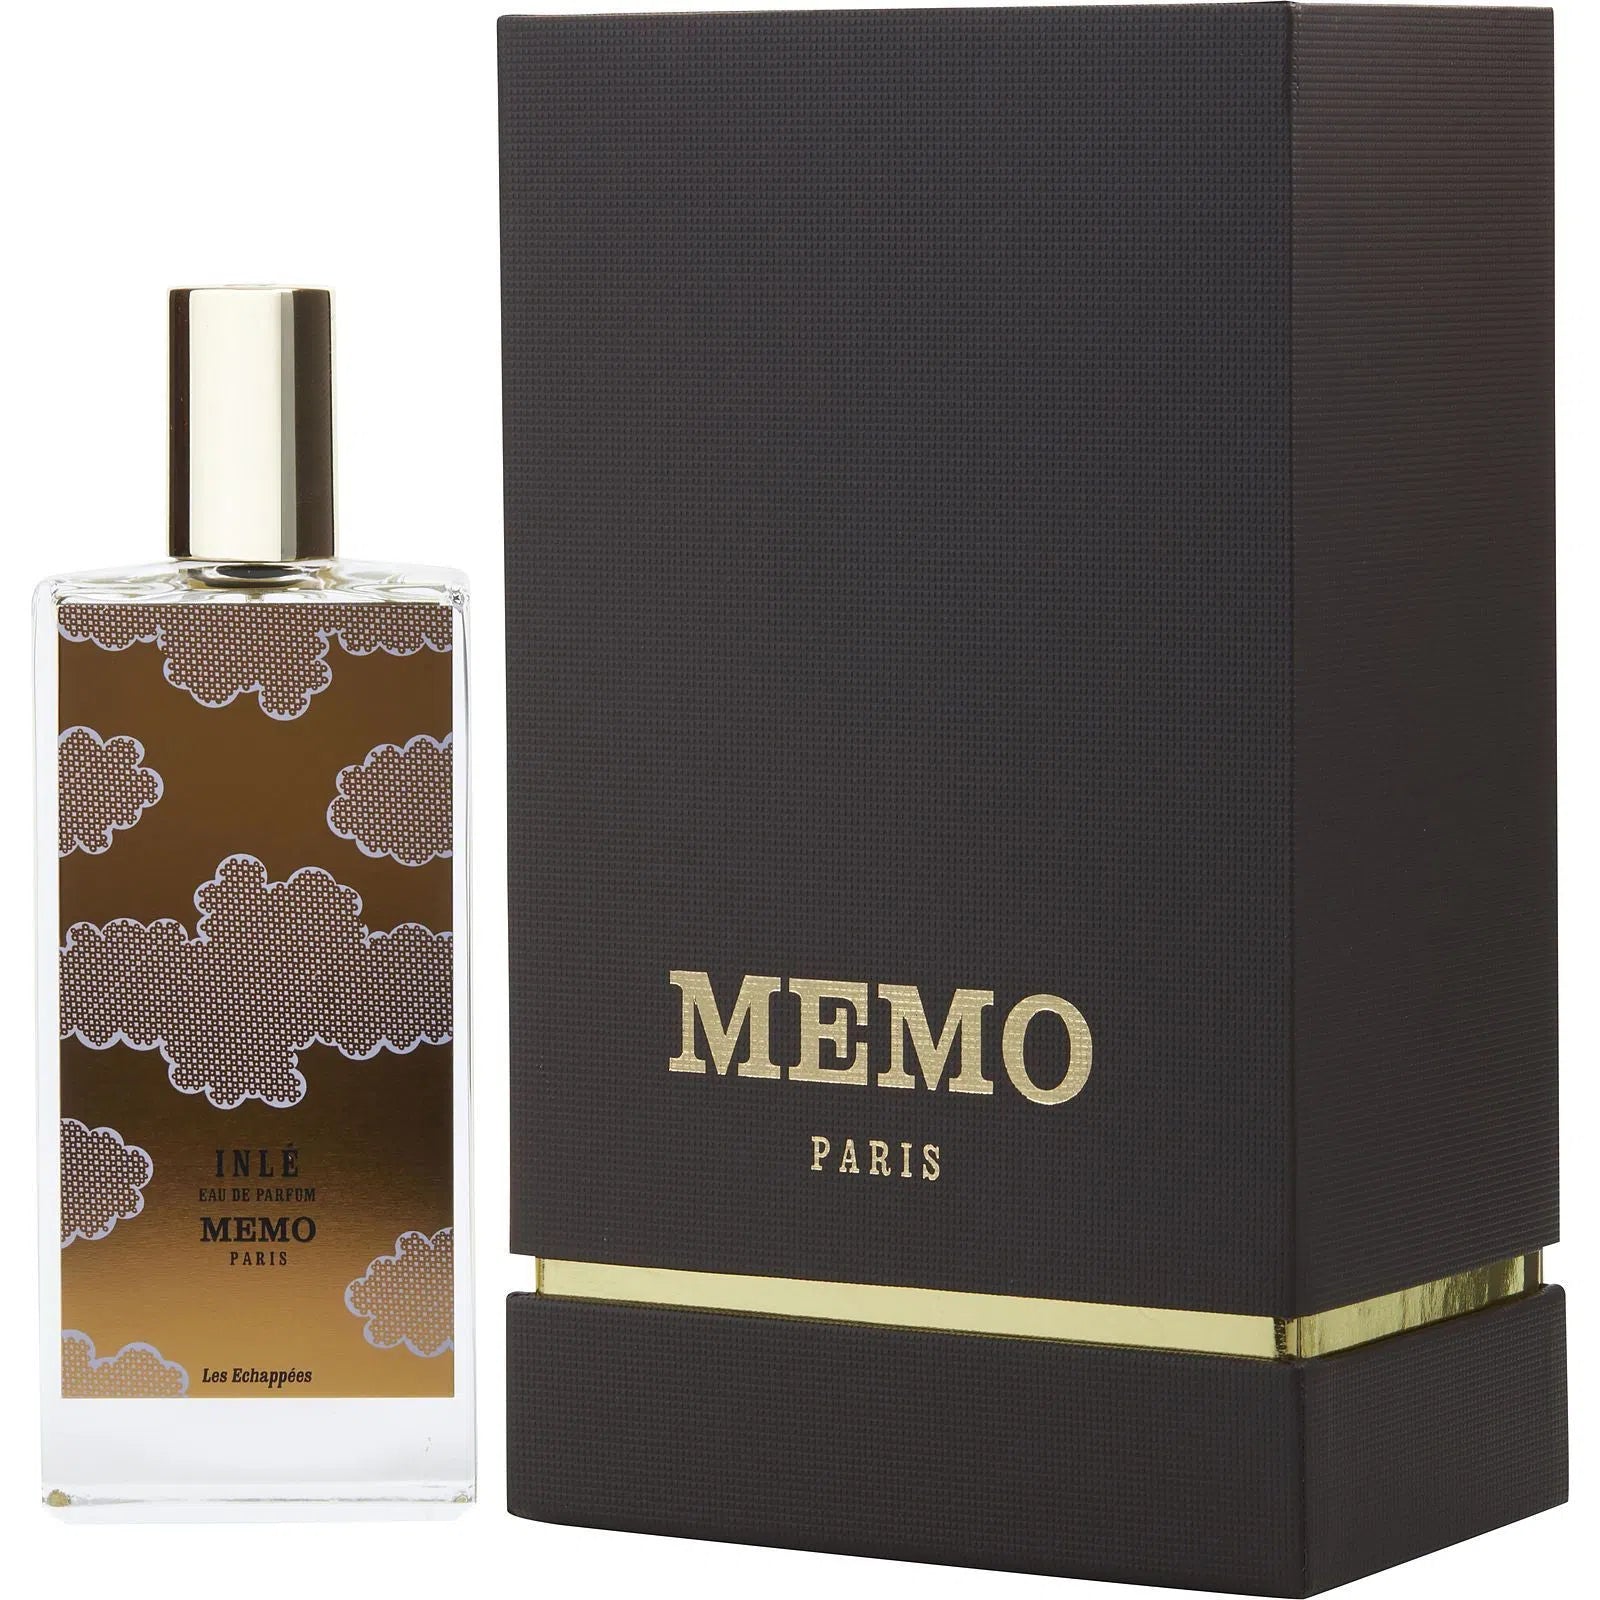 Perfume Memo Paris Inle EDP (U) / 75 ml - 3700458611069- Prive Perfumes Honduras